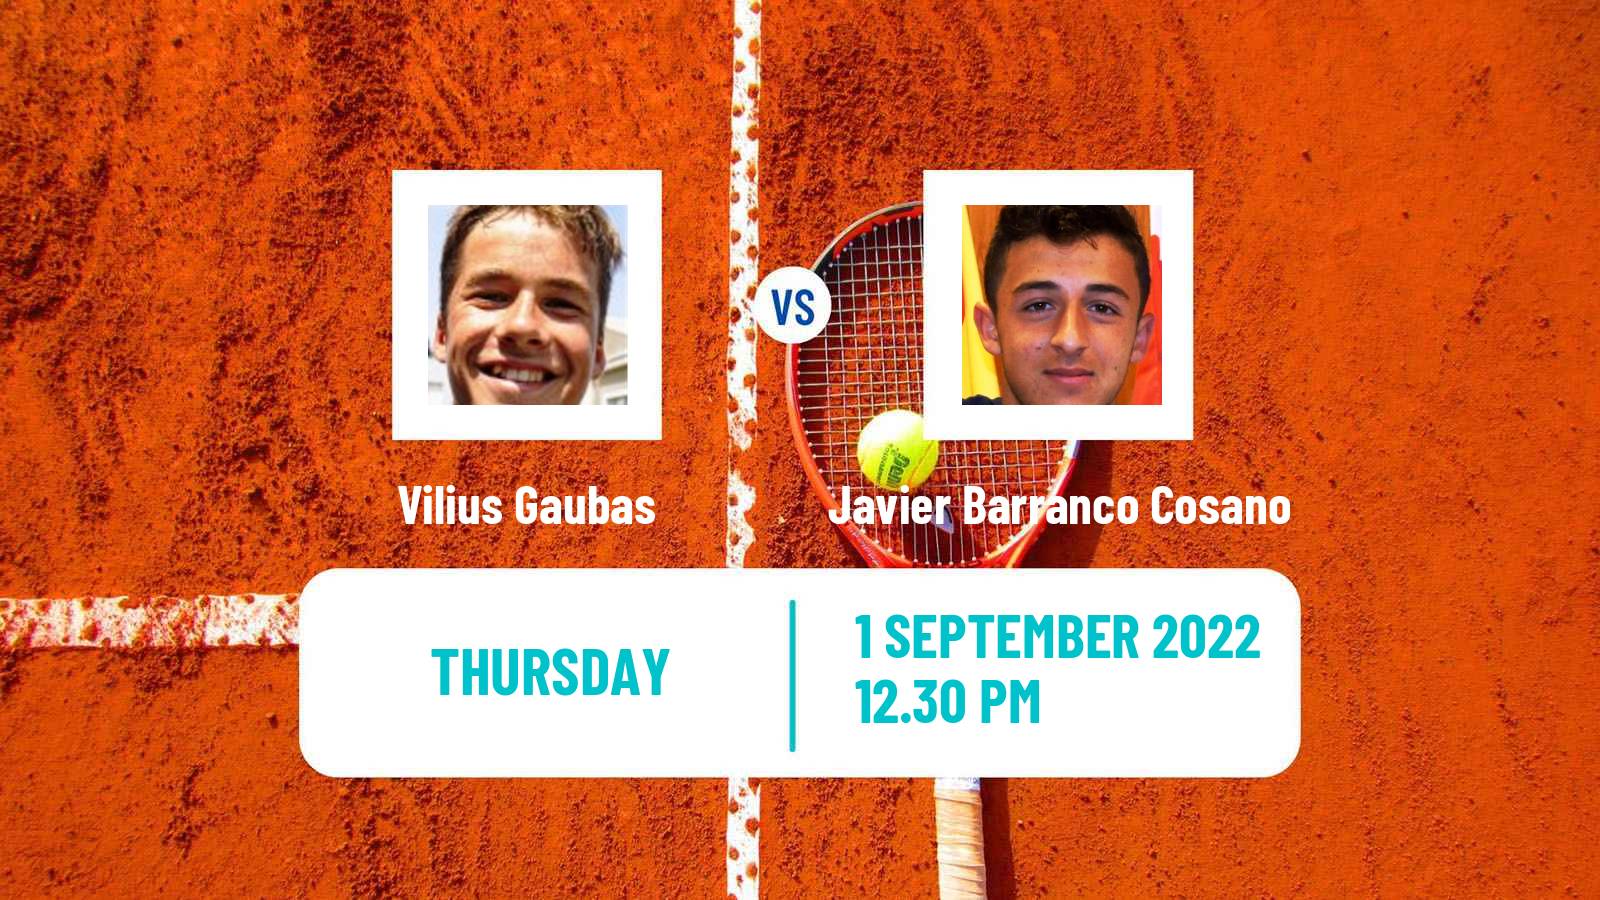 Tennis ITF Tournaments Vilius Gaubas - Javier Barranco Cosano